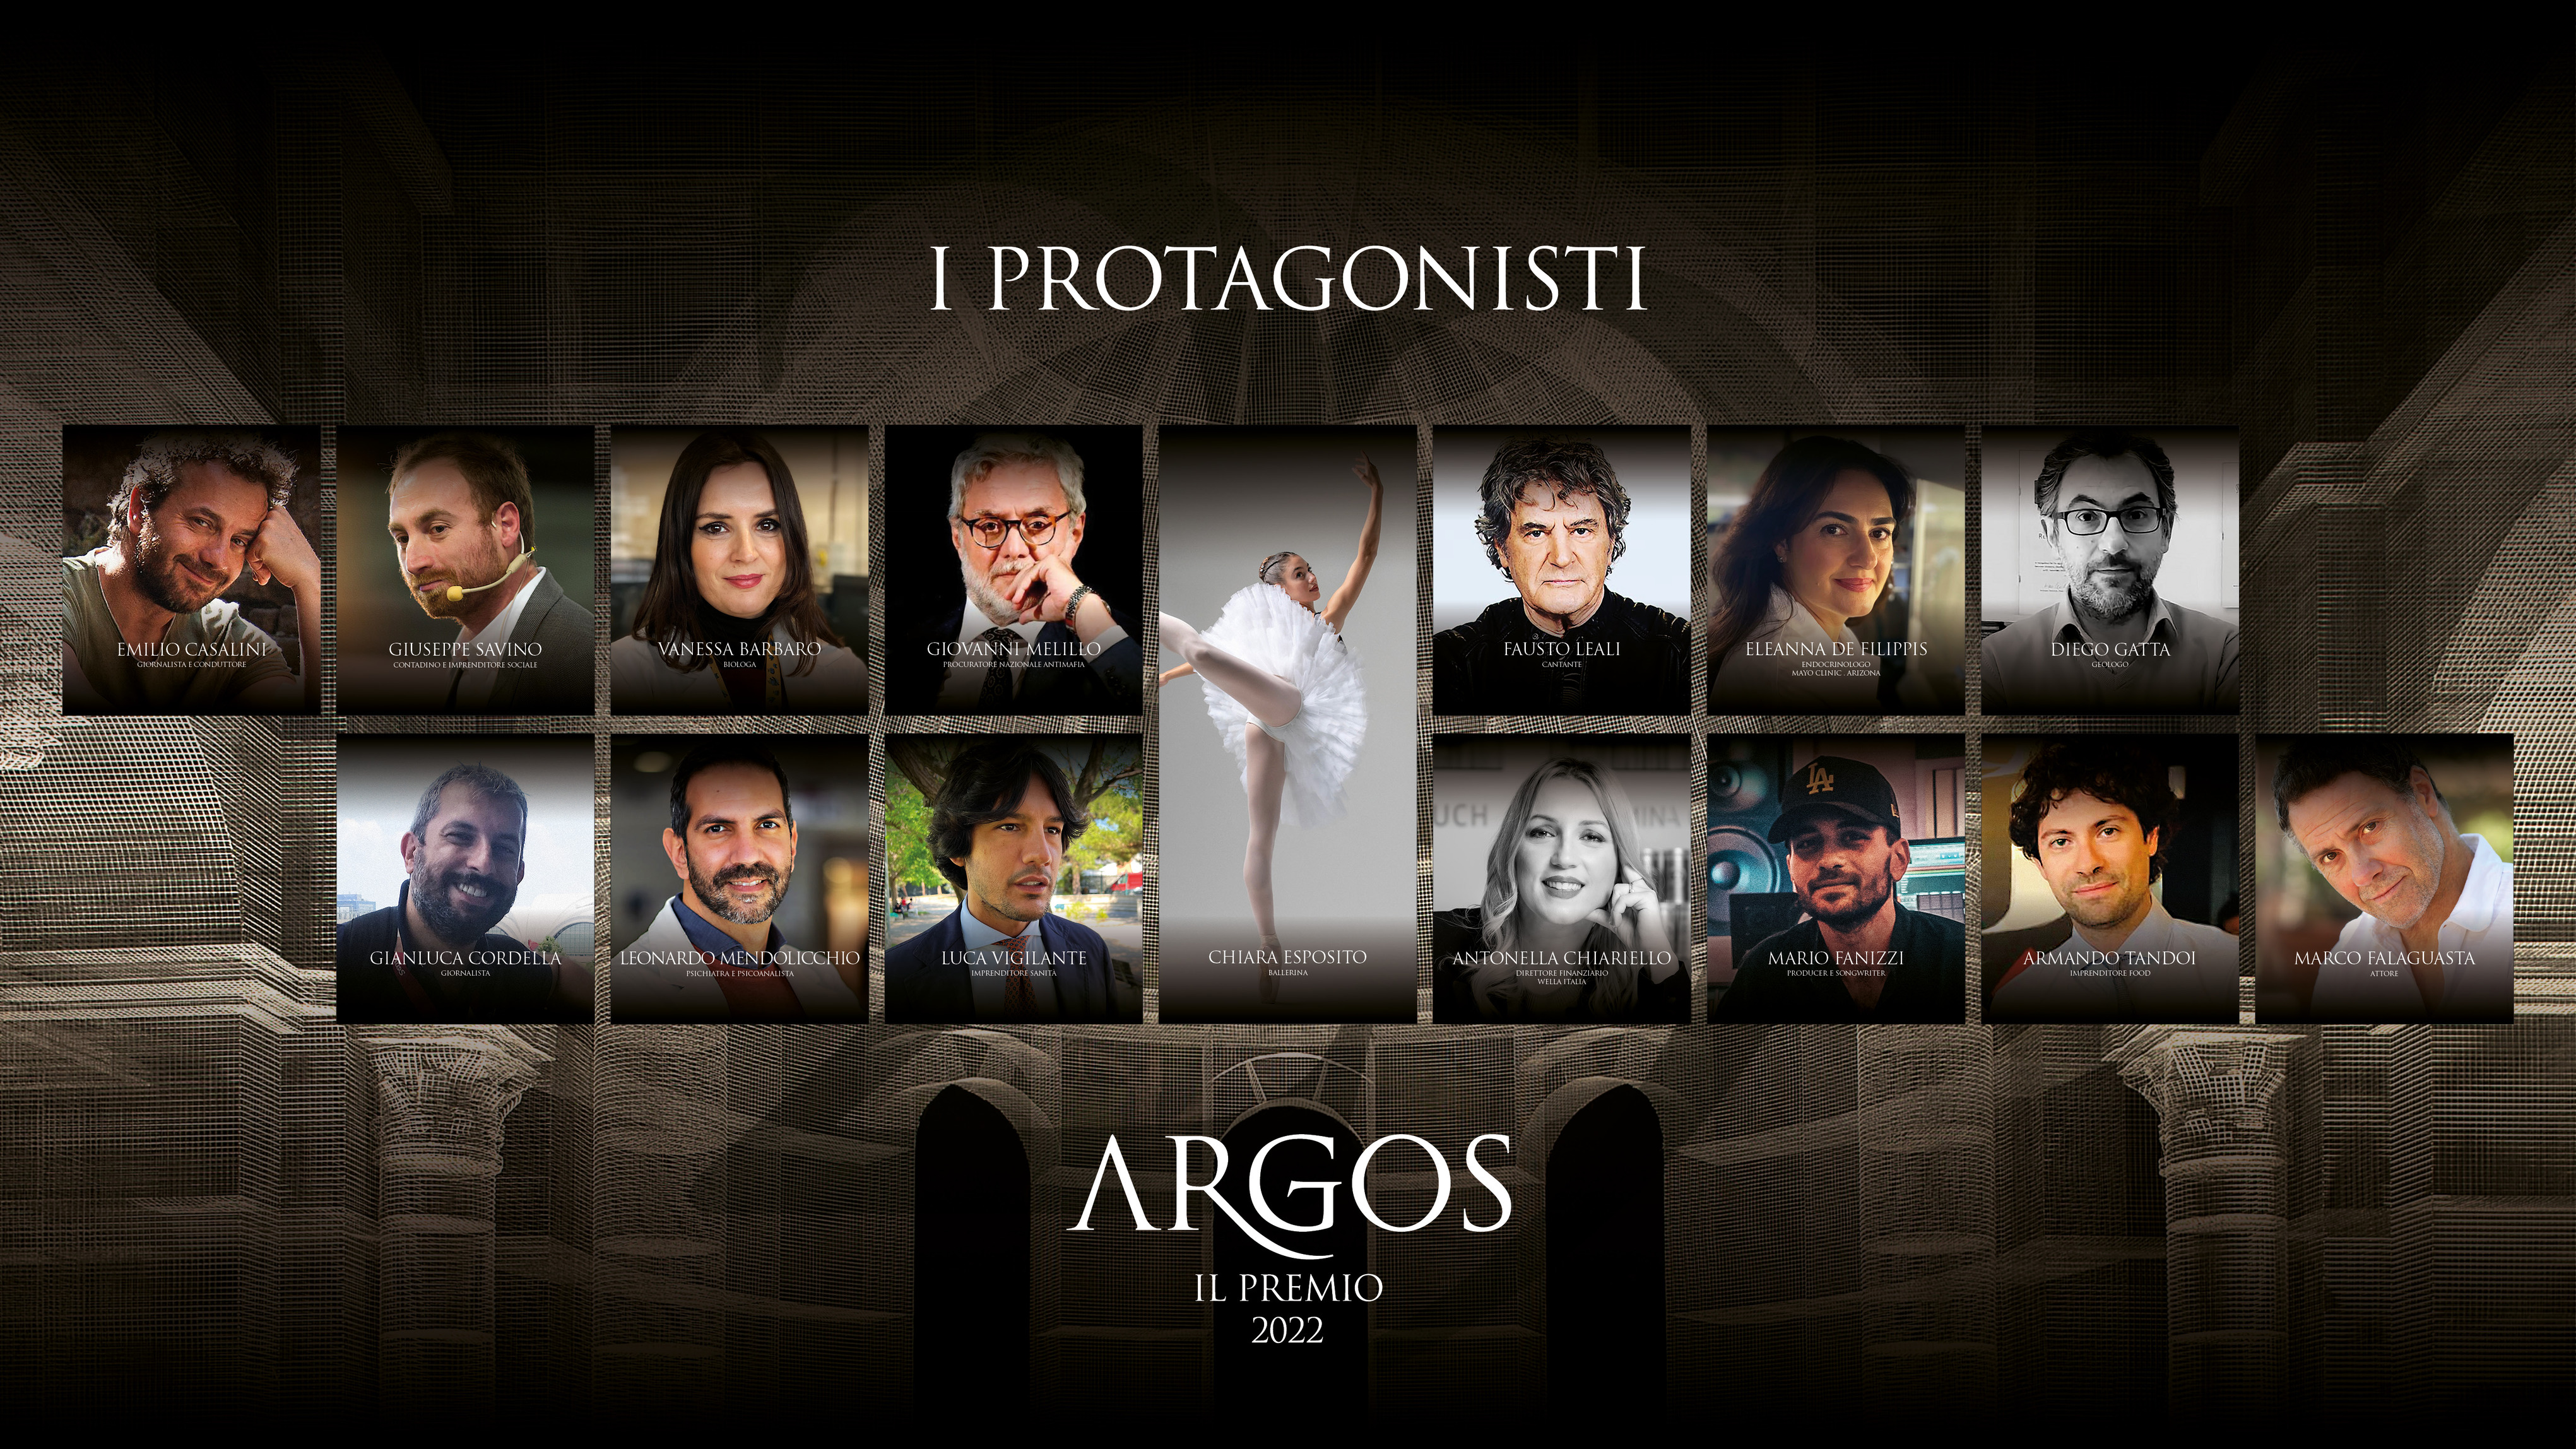 ARGOS CARD 16-9 - PROTAGONISTI OK